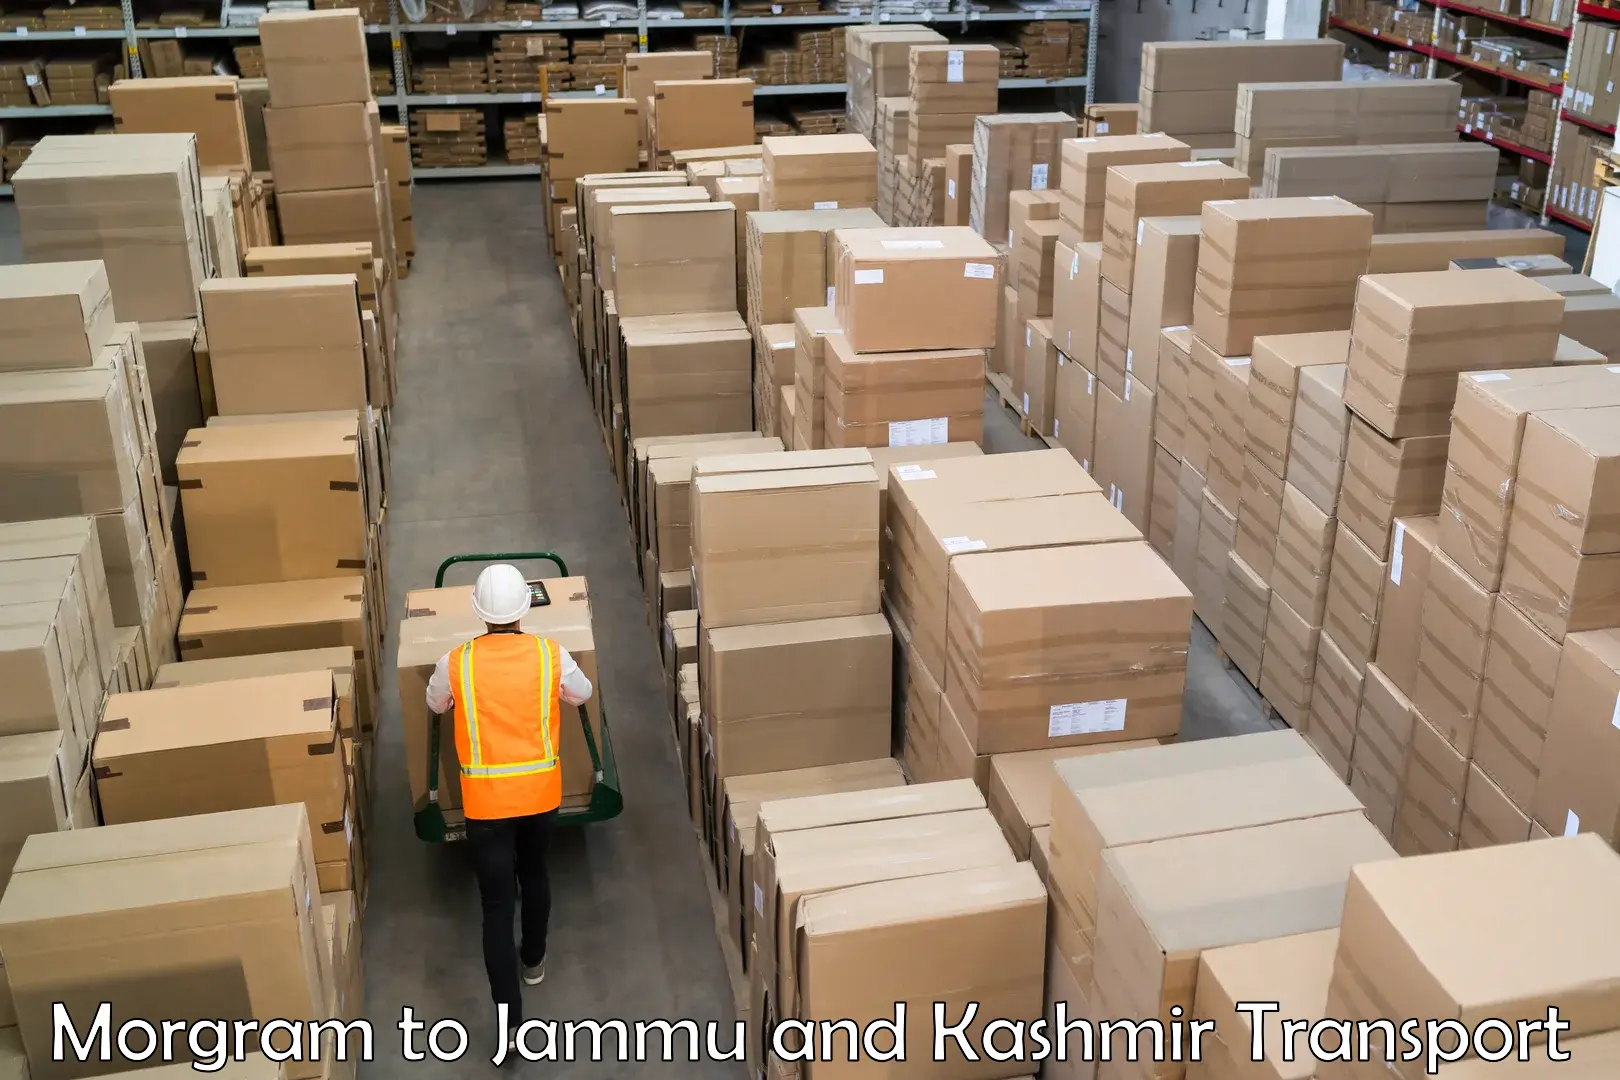 Daily parcel service transport Morgram to University of Jammu